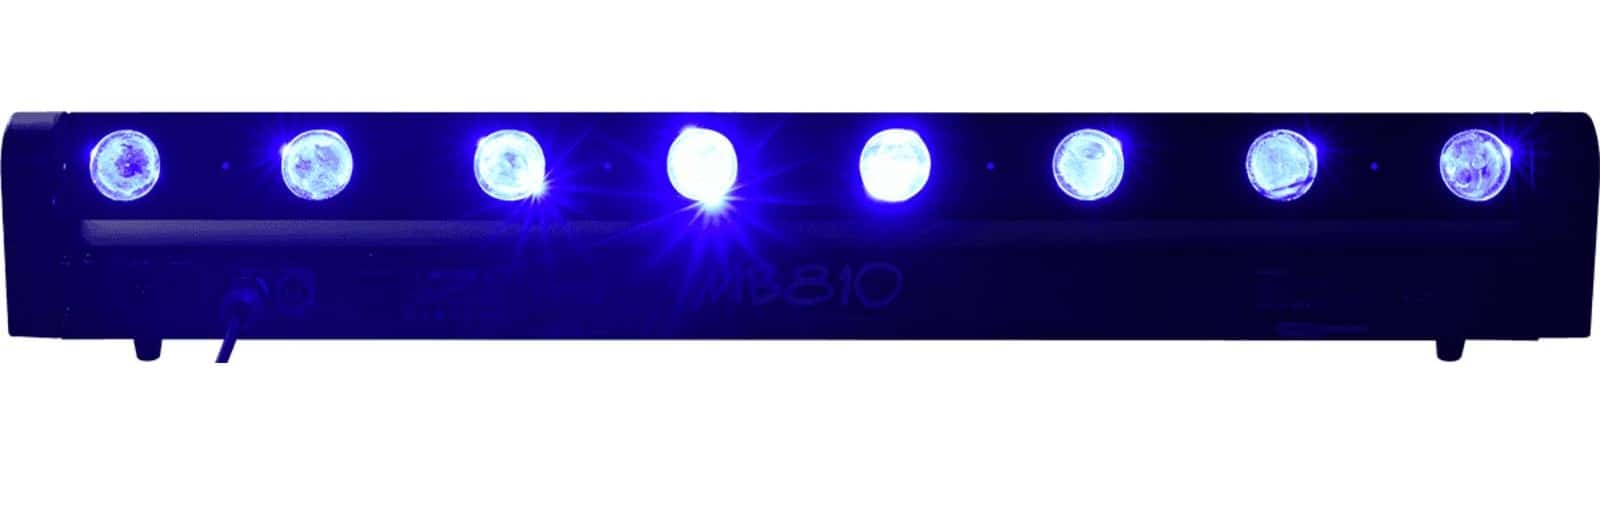 ALGAM LIGHTING MB 810 - BARRE 8 LEDS MOTORISES RGBW